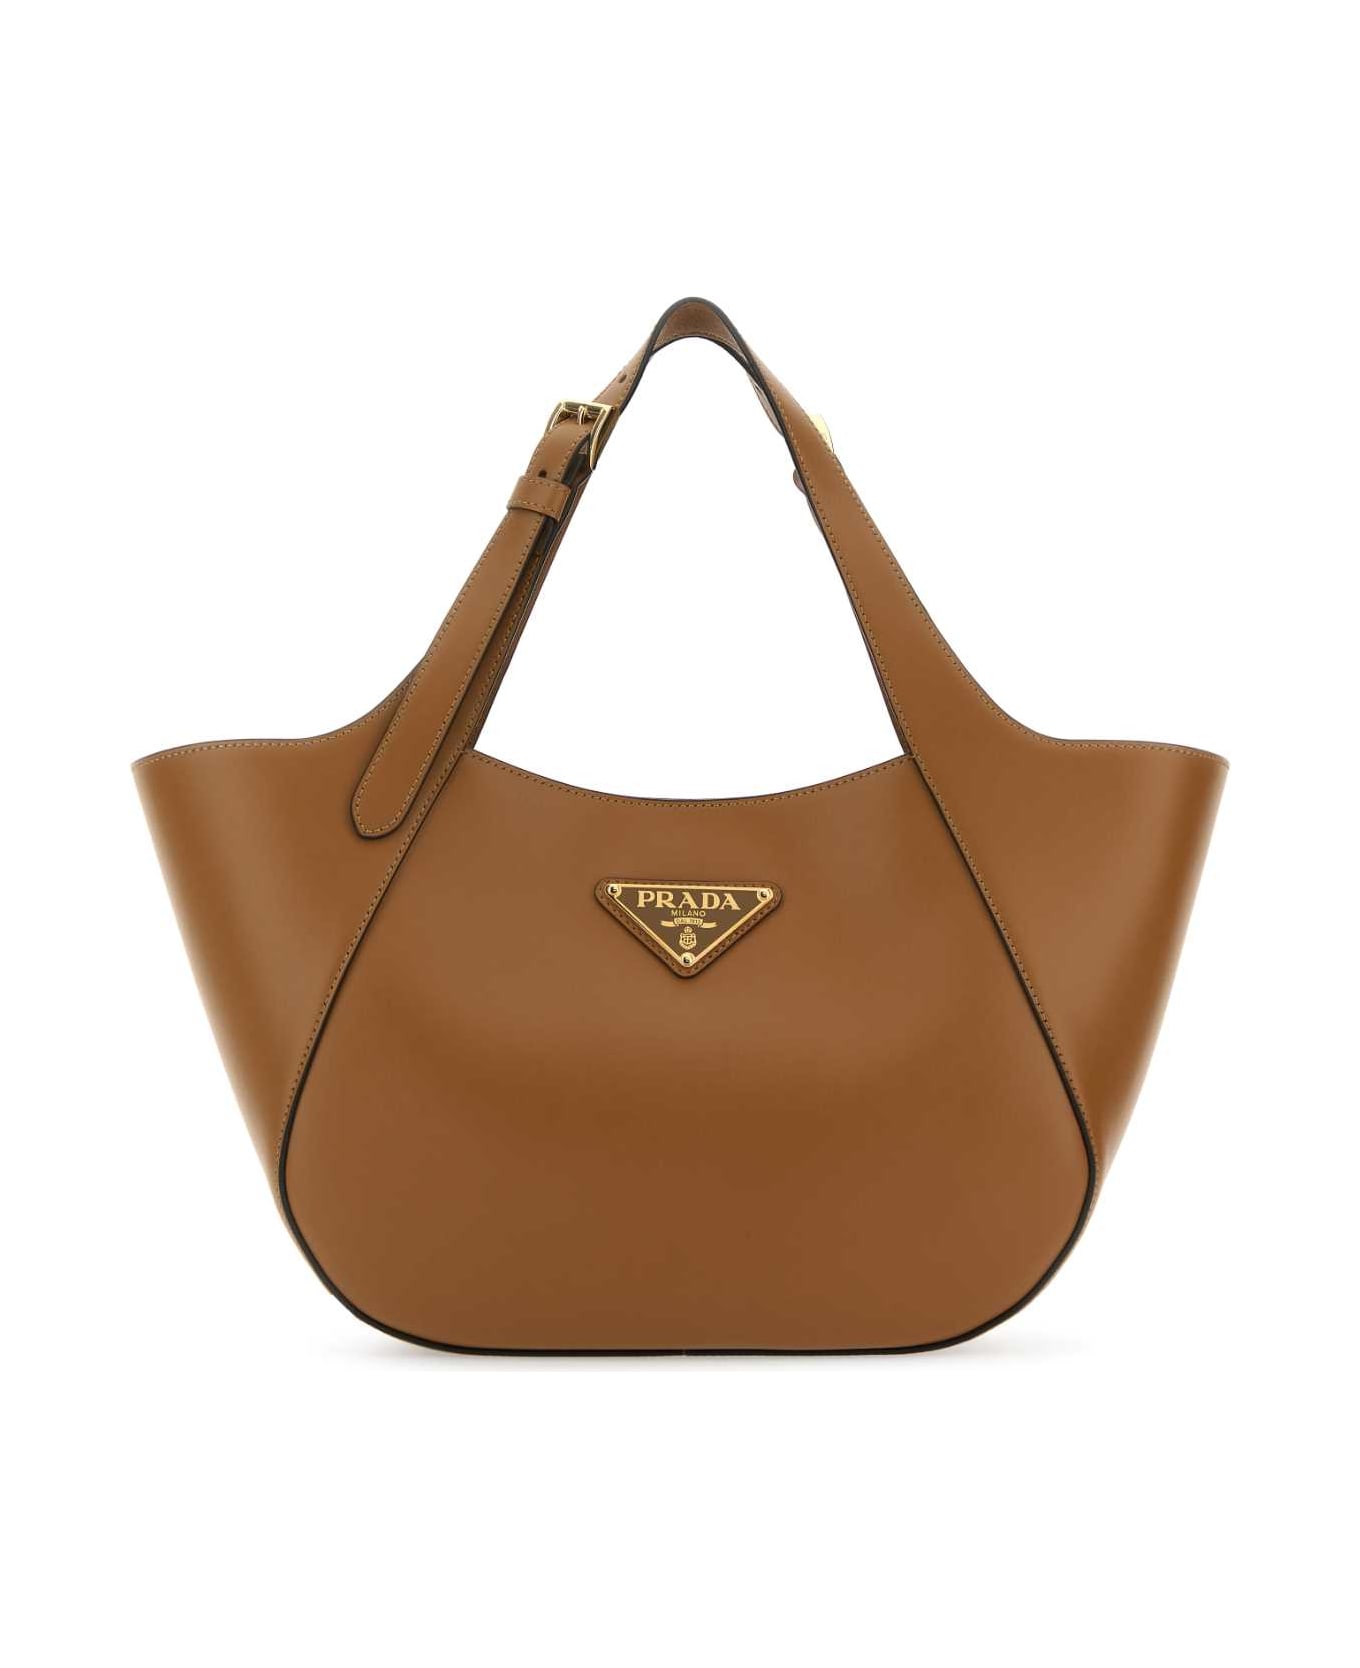 Prada Brown Leather Handbag - CARAMEL0N トートバッグ